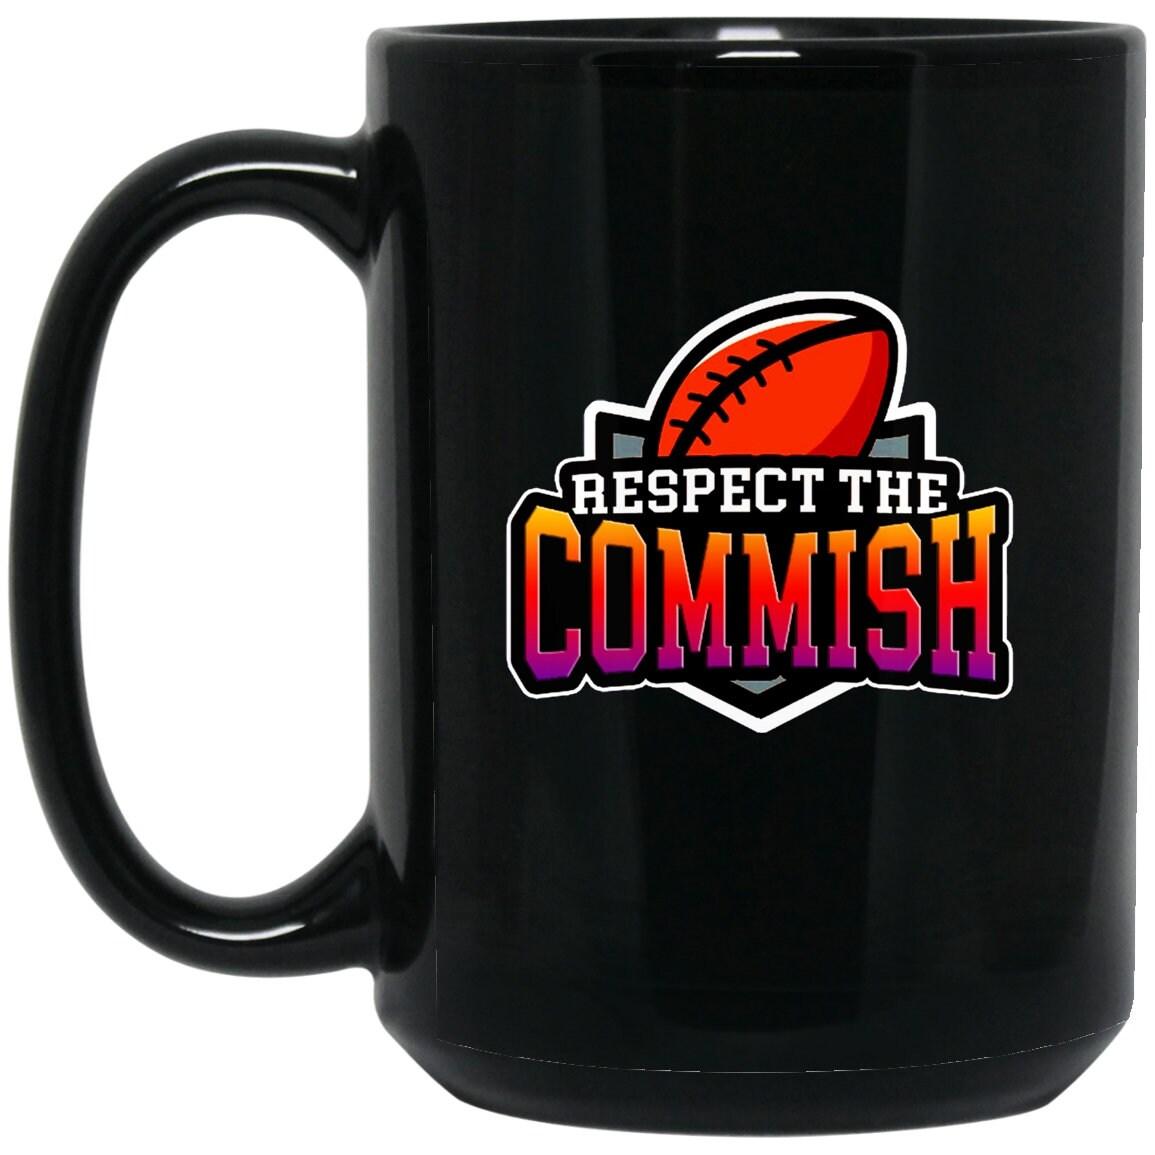 Respect the Commish,  15 oz. Black Mug, Fantasy Football Commissioner Accent Mug, fantasy football queen, fantasy football King - plusminusco.com